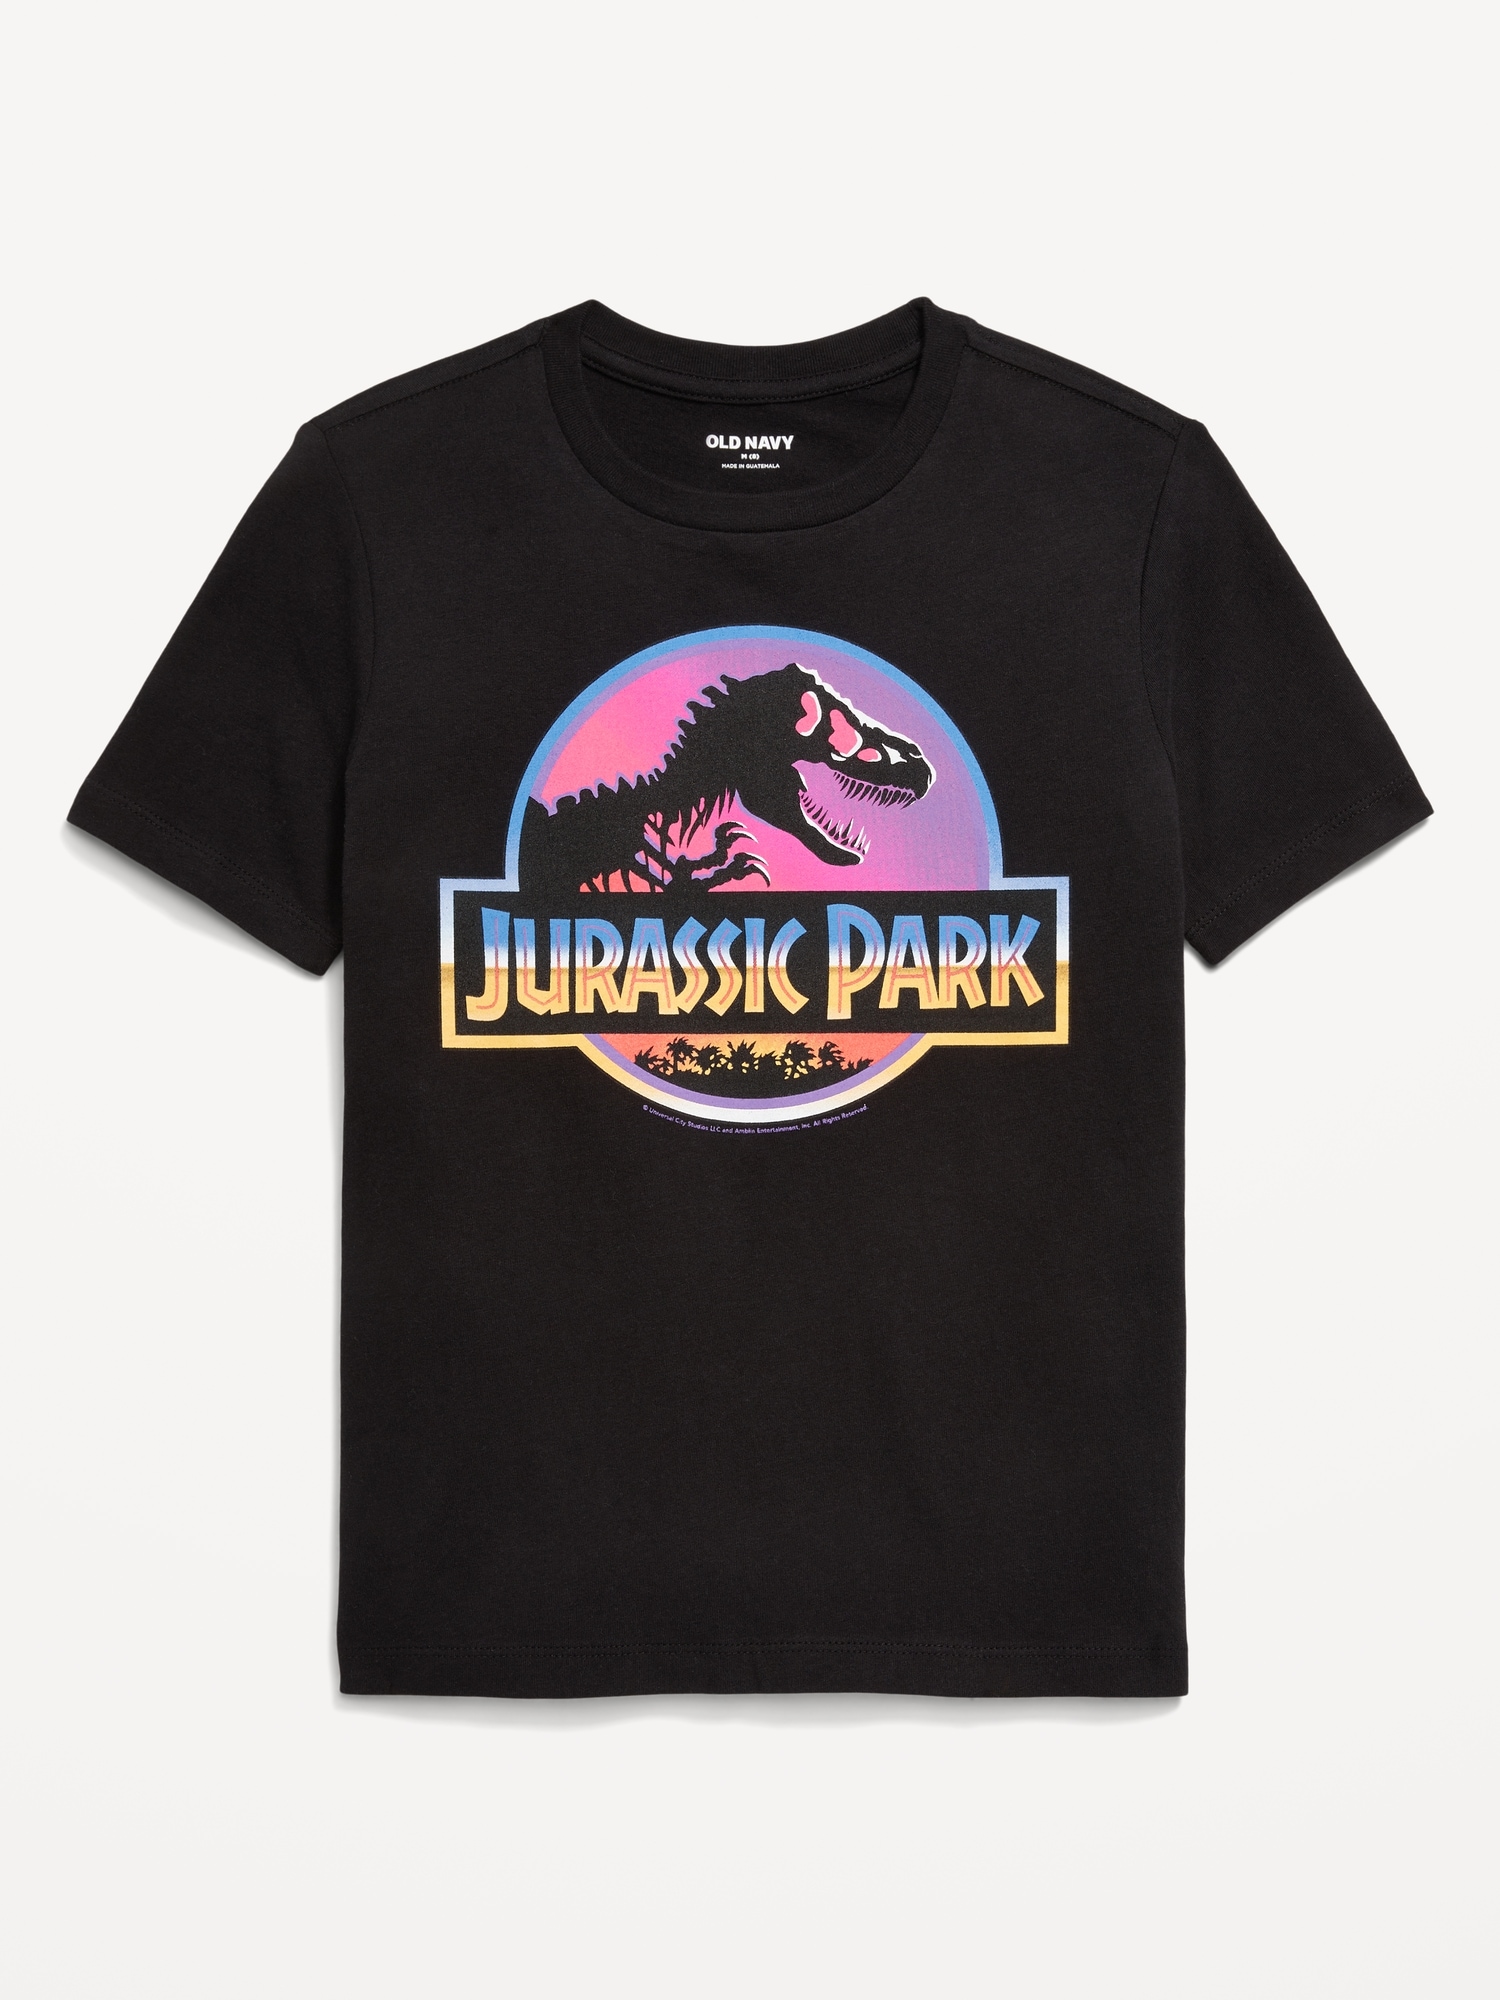 Jurassic Park Gender-Neutral Graphic T-Shirt for Kids